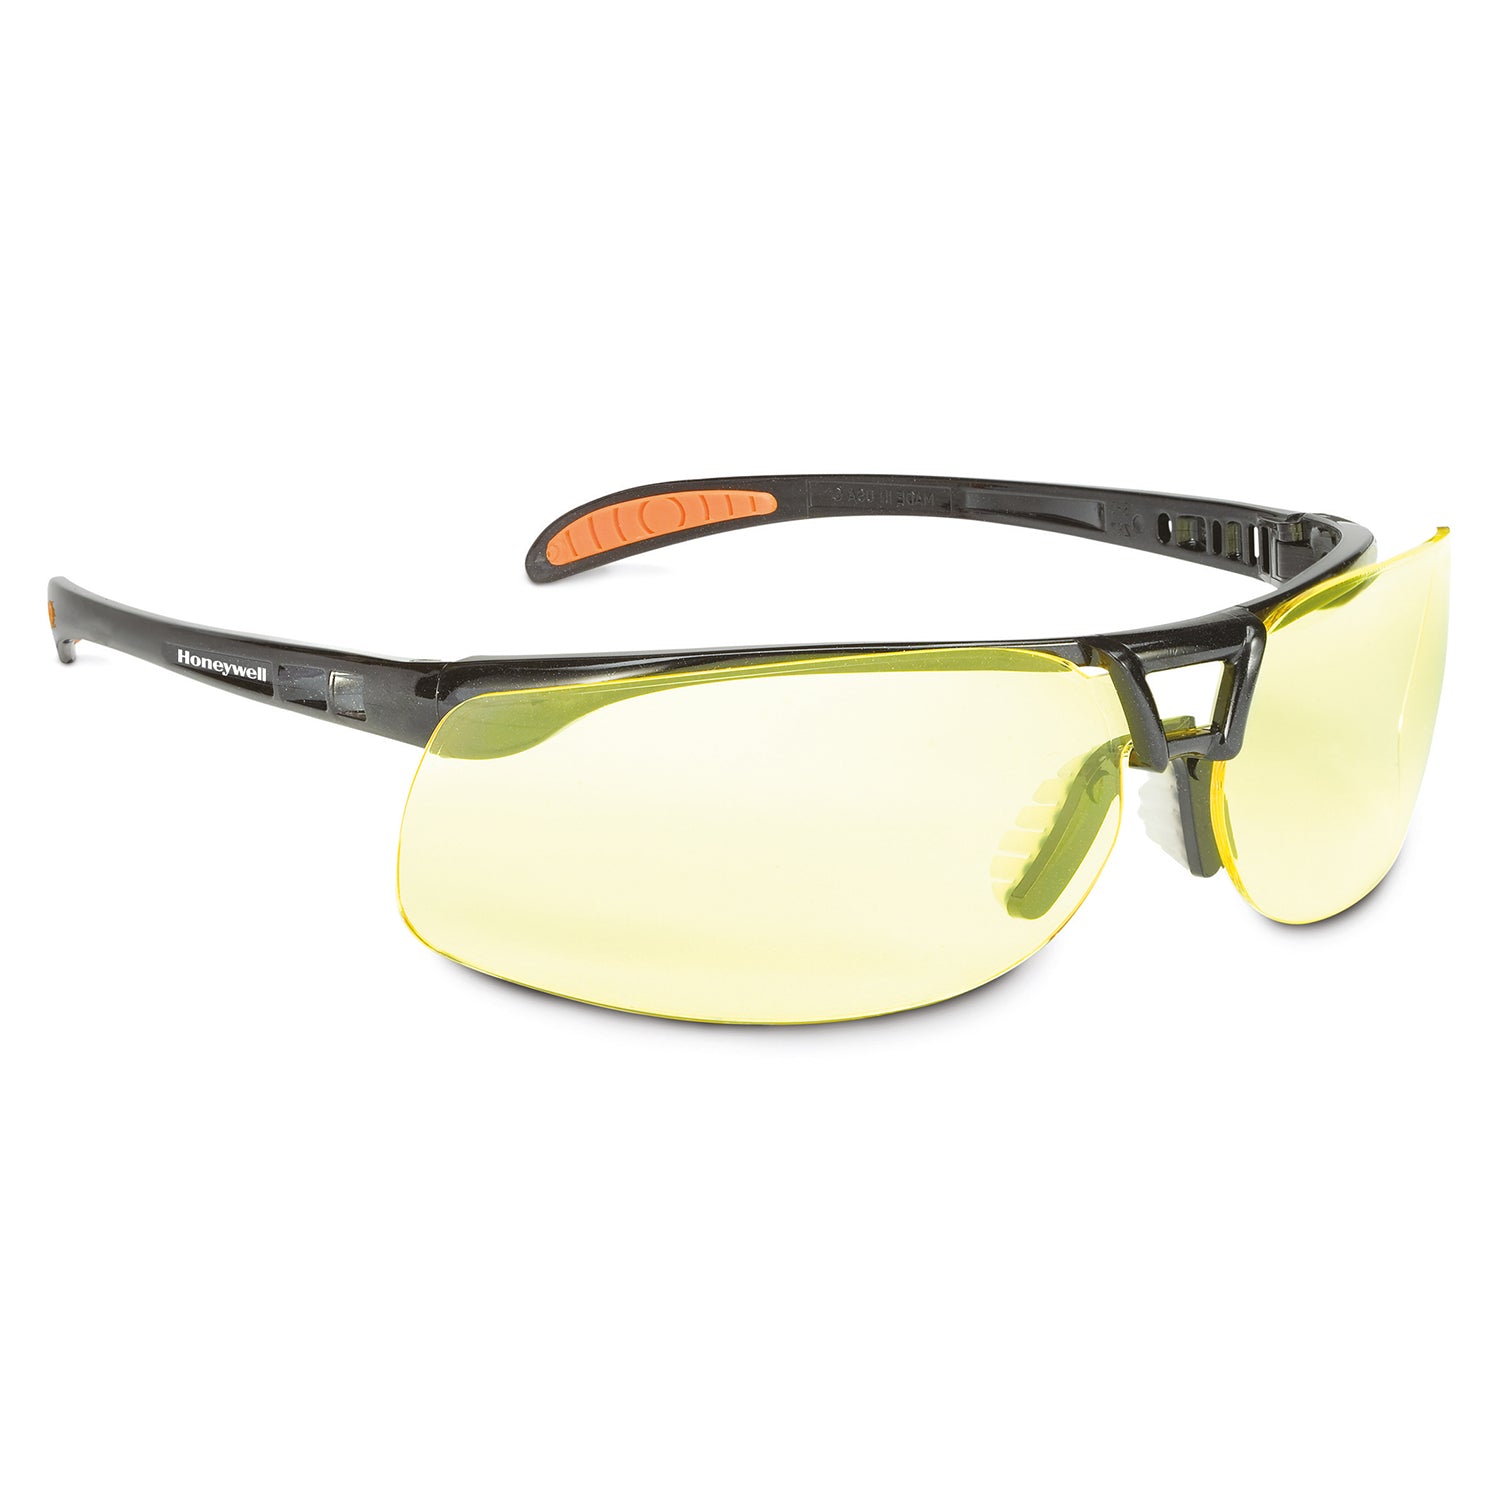 Honeywell Protege Yellow HC Safety Glasses 